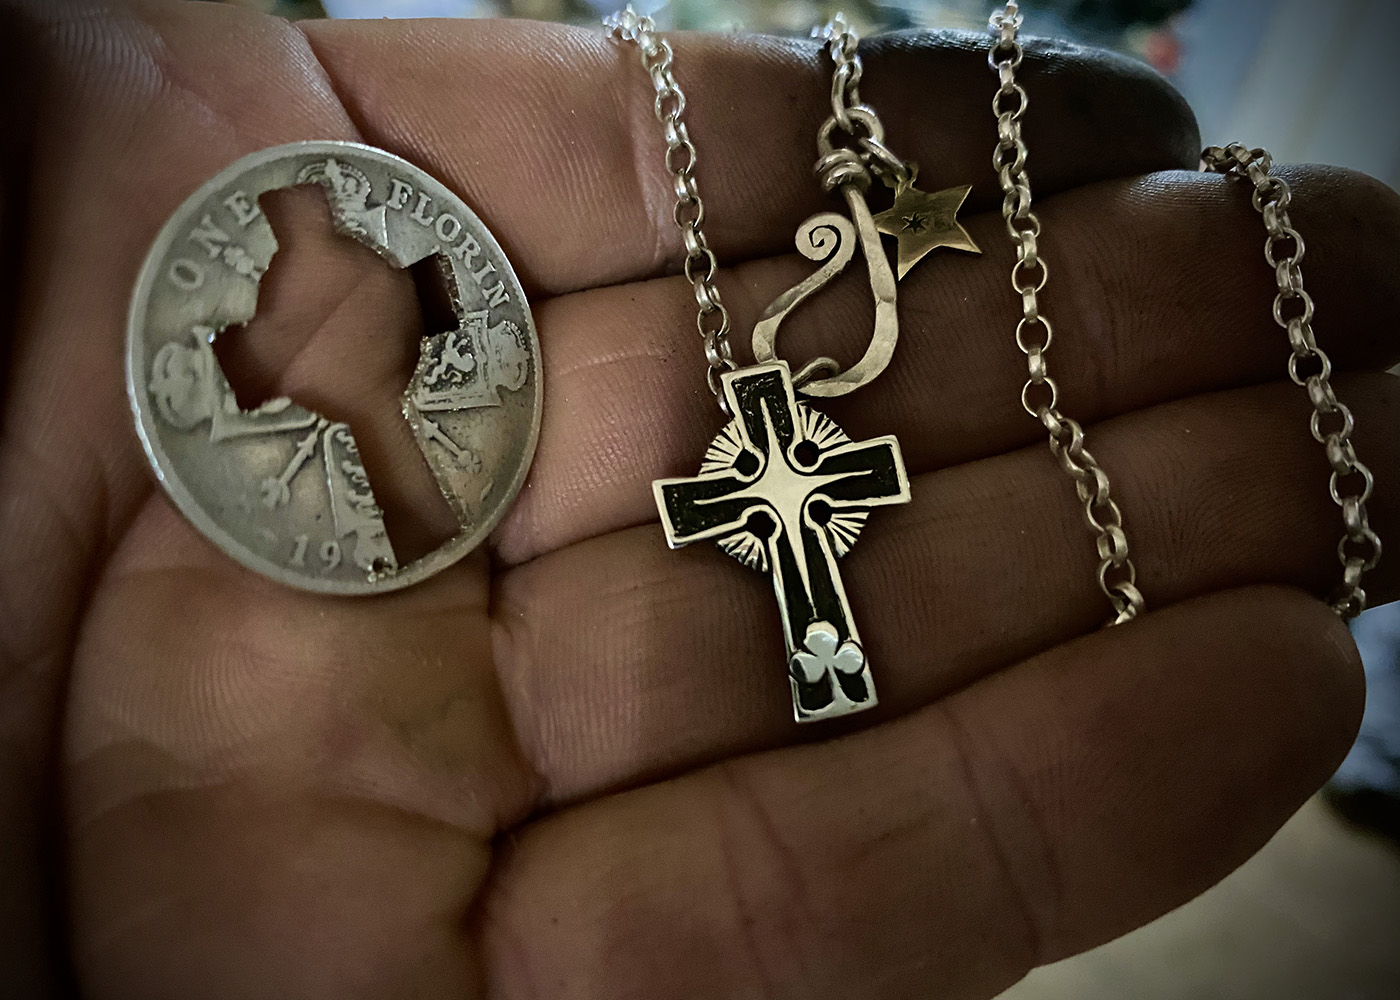 Celtic Cross handmade from silver coin